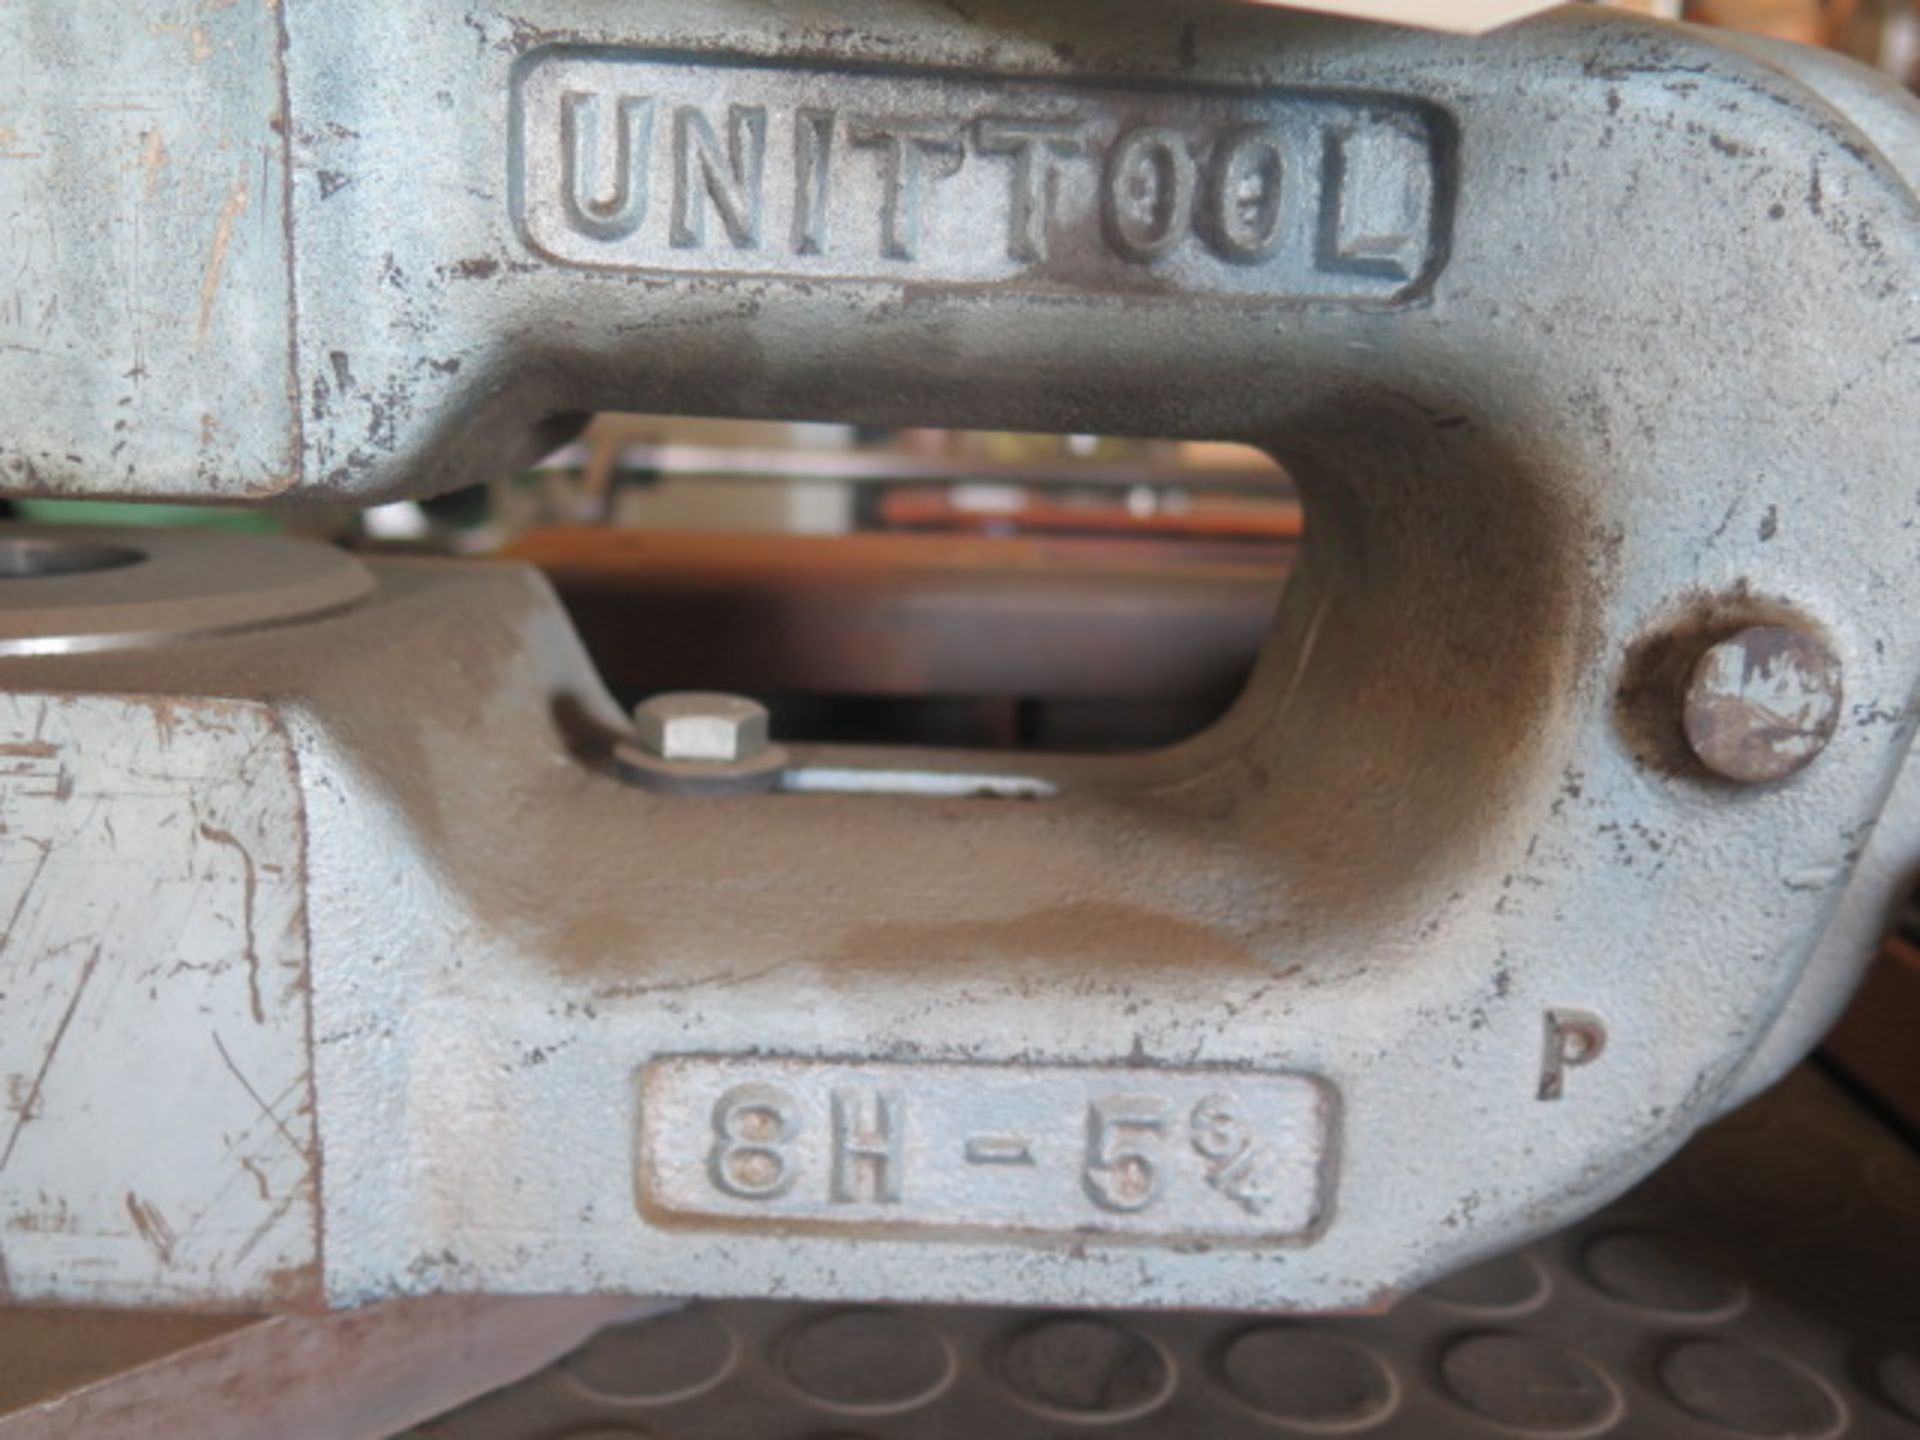 Unipunch 5 3/4" Die Base w/ Custom Adaptor Plate for Ironwroker - Image 4 of 4